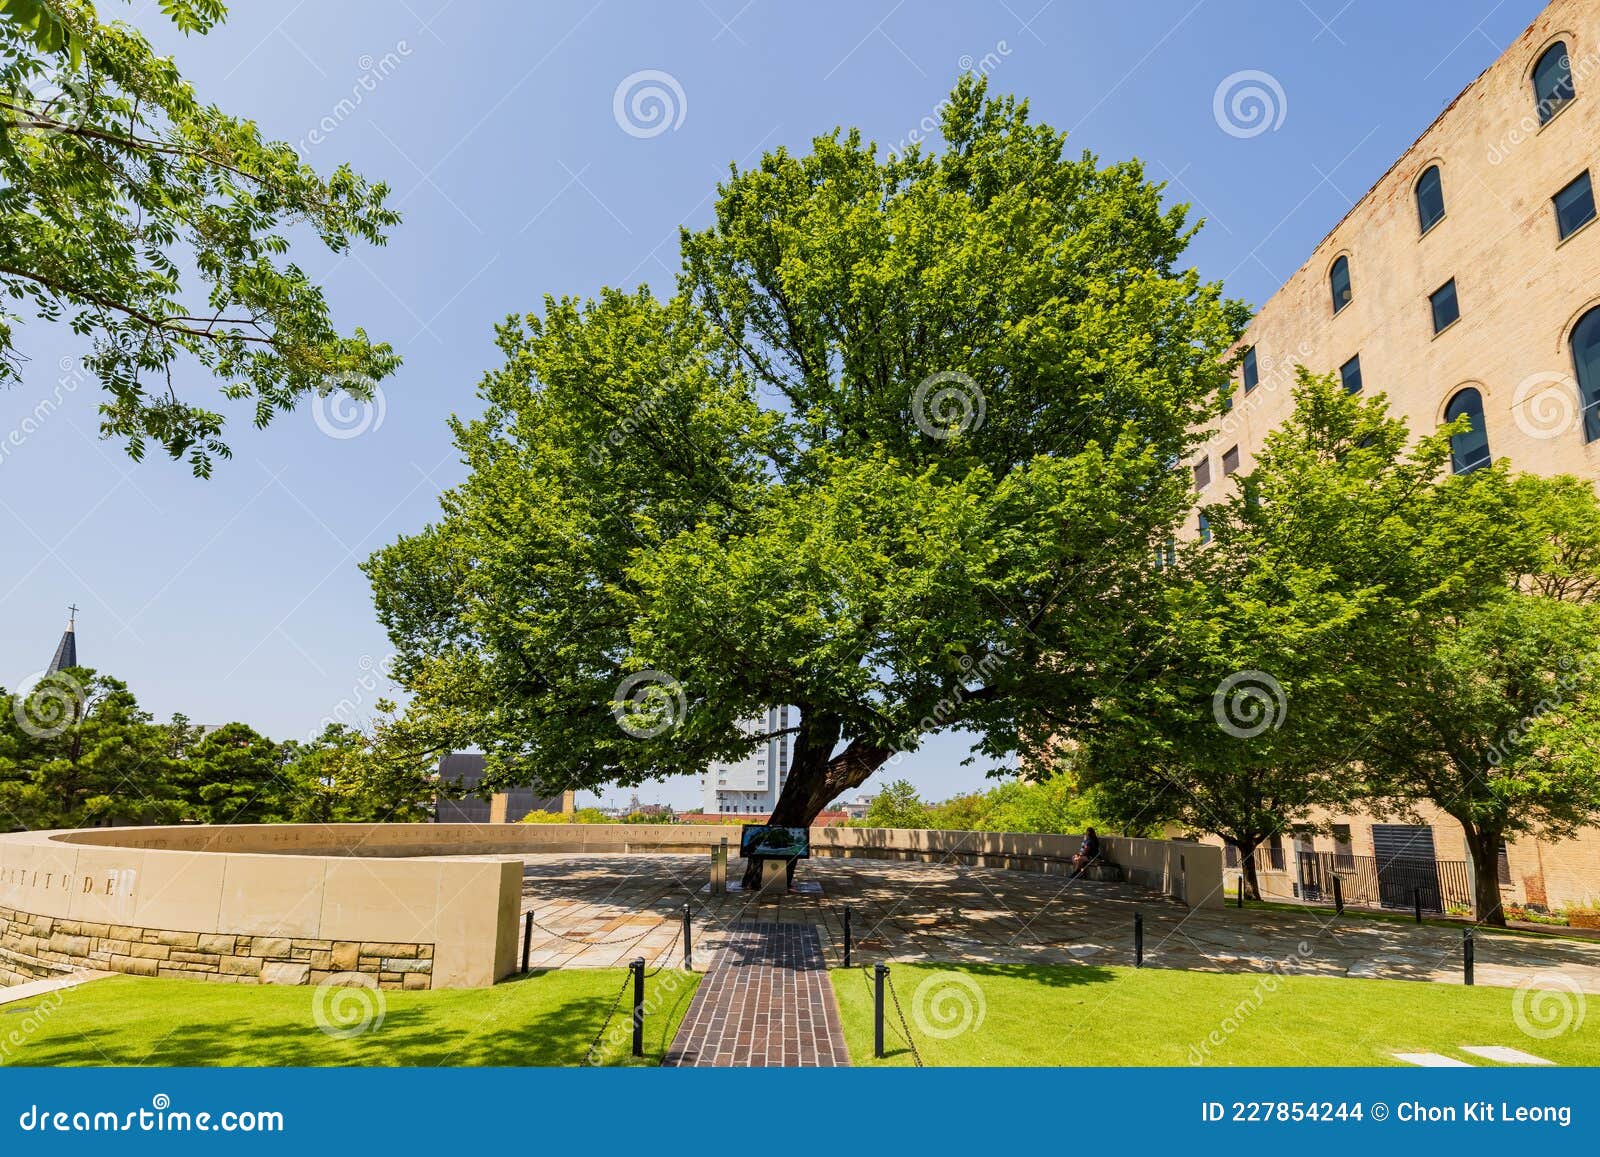 The Survivor Tree – Today – Oklahoma City National Memorial & Museum